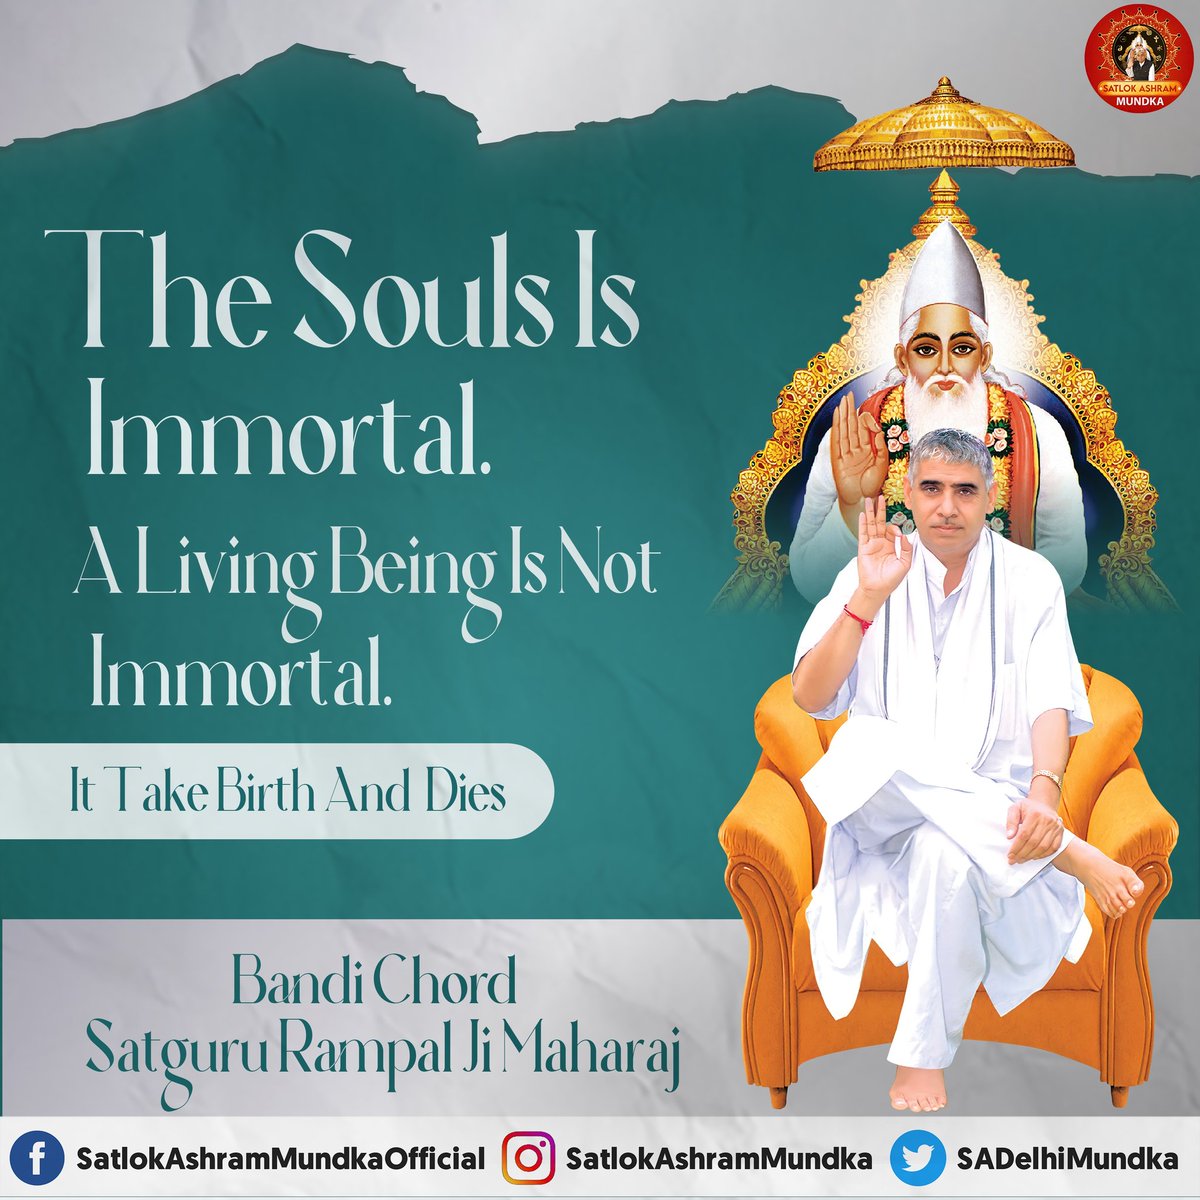 The Souls Is Immortal. A Living Being Is Not Immortal. It Take Birth And Dies.

#SatlokAshramMundka 
#KabirisGod